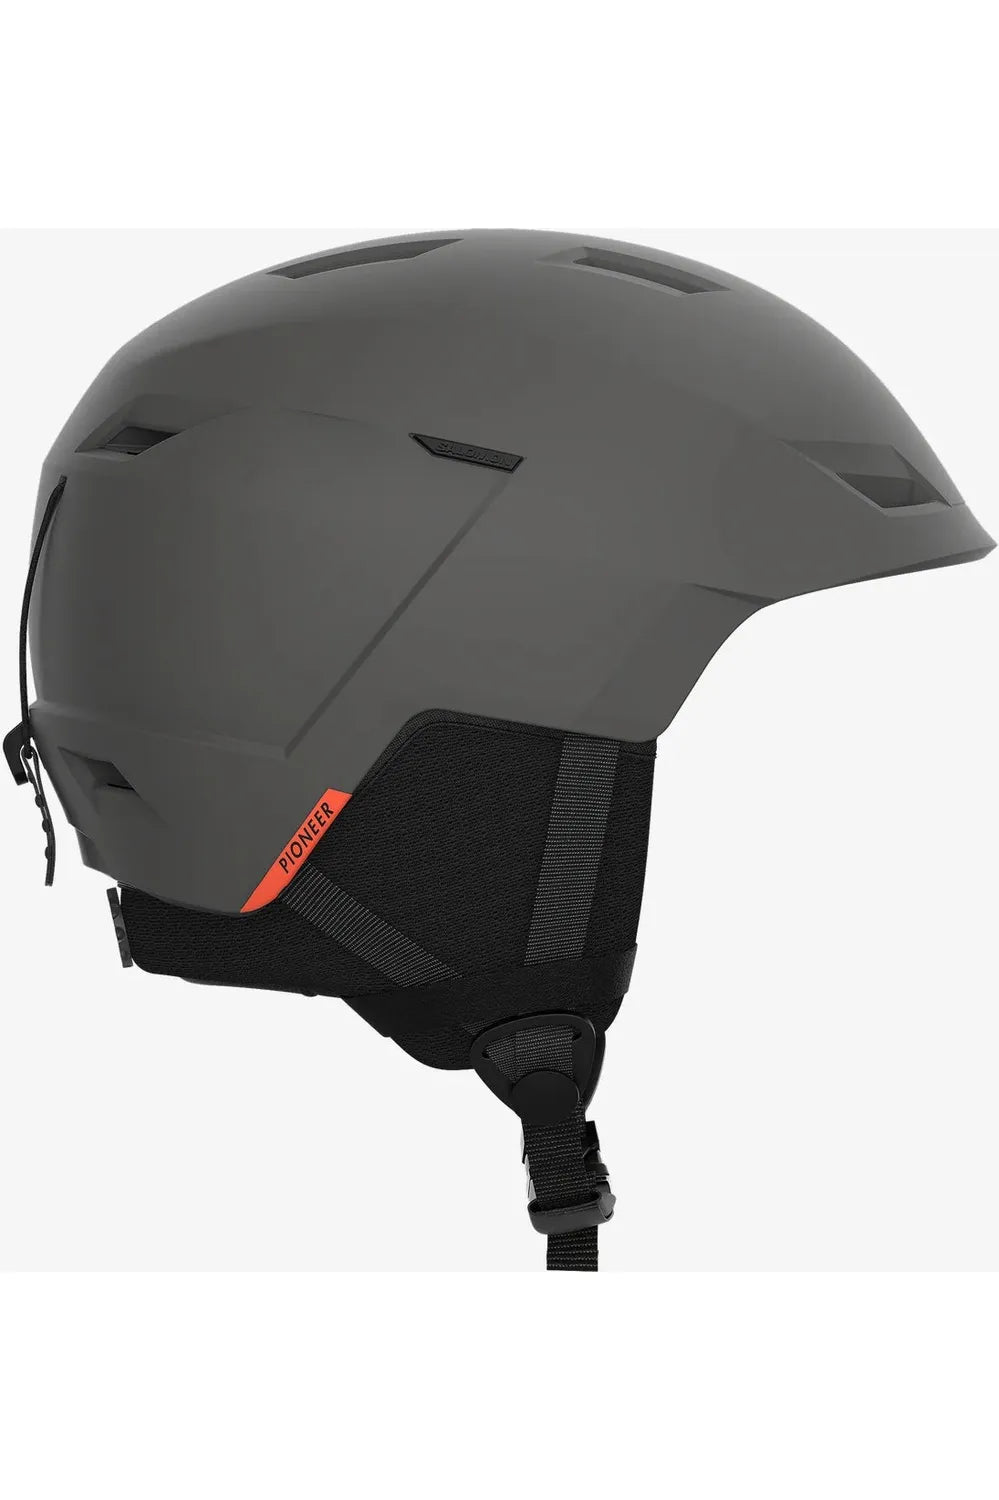 Salomon Pioneer Lt Access Grey Helmet